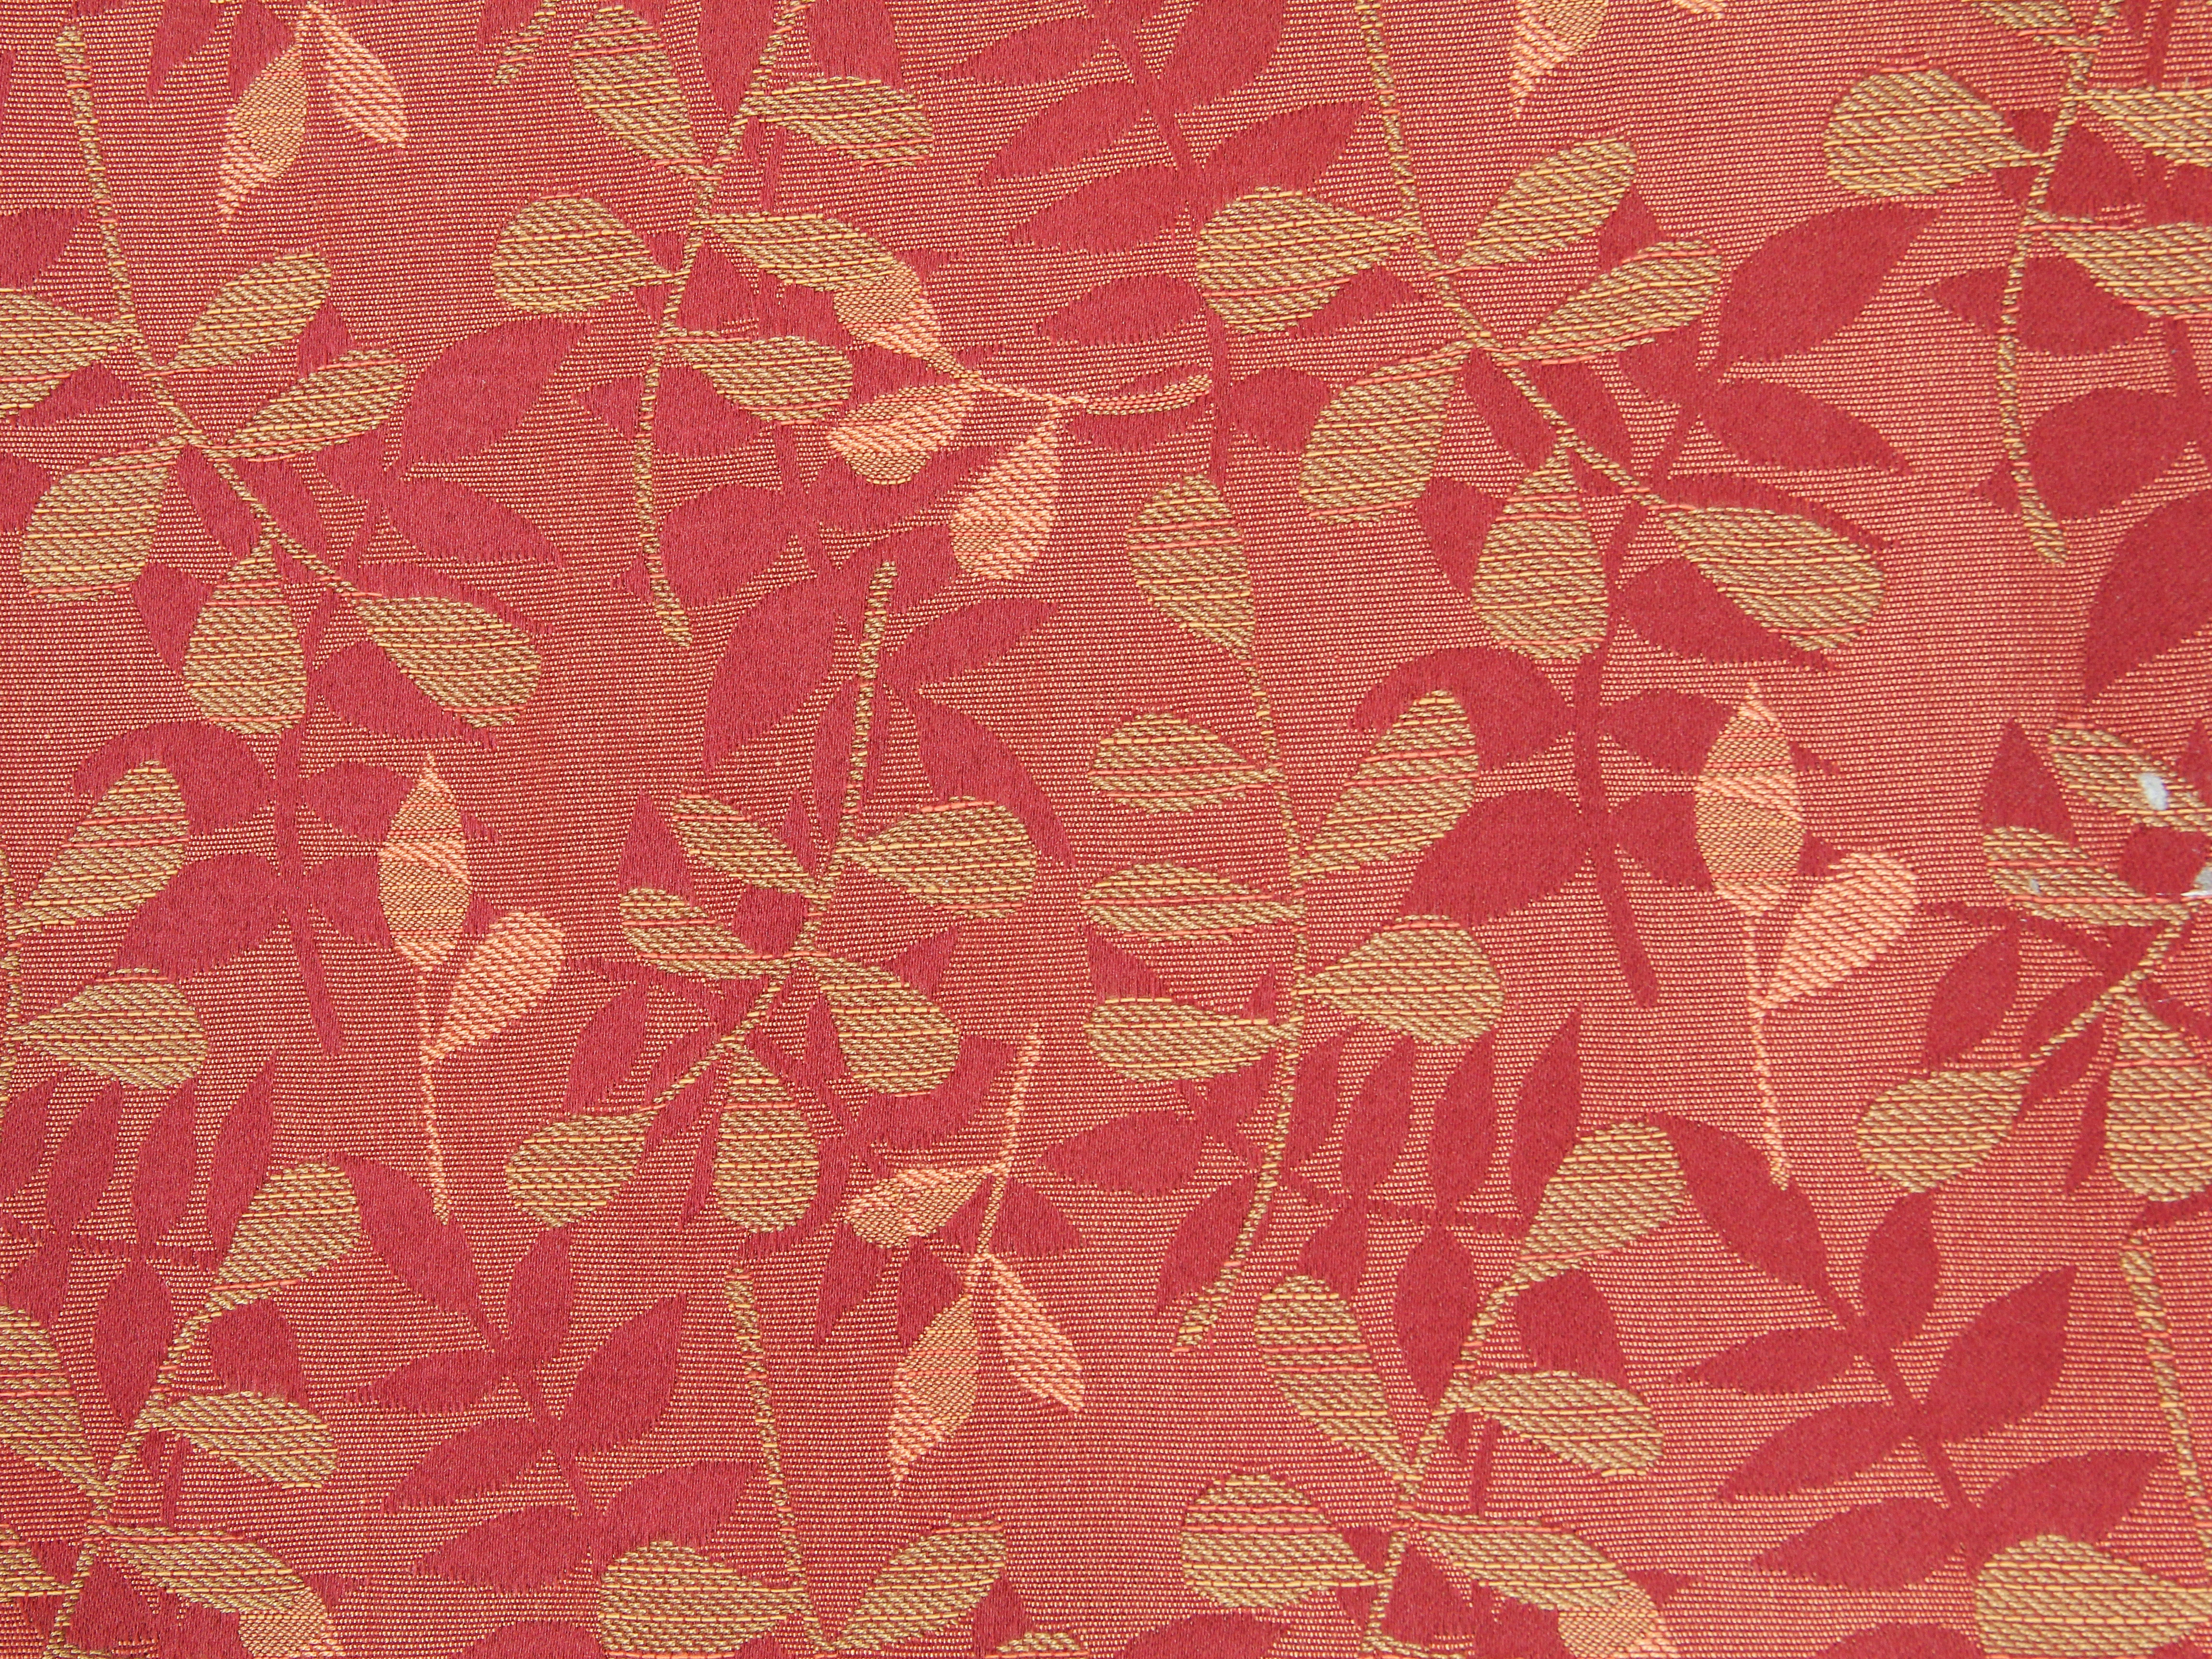 Fabric Texture Red Leaf Pattern Floral Print Desktop HD Wallpapers Download Free Images Wallpaper [wallpaper981.blogspot.com]